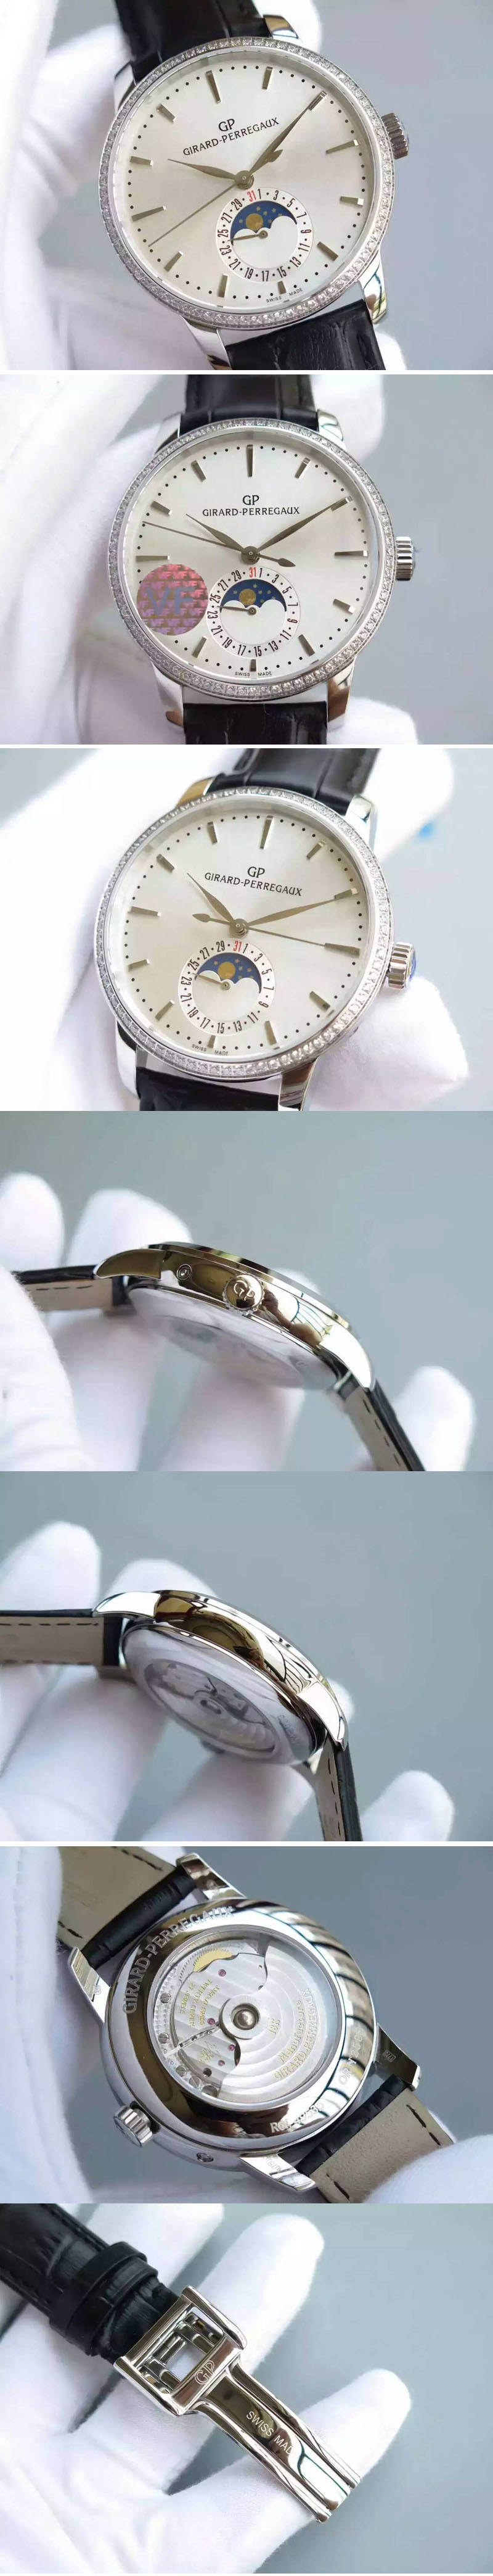 Replica Girard Perregaux Watches